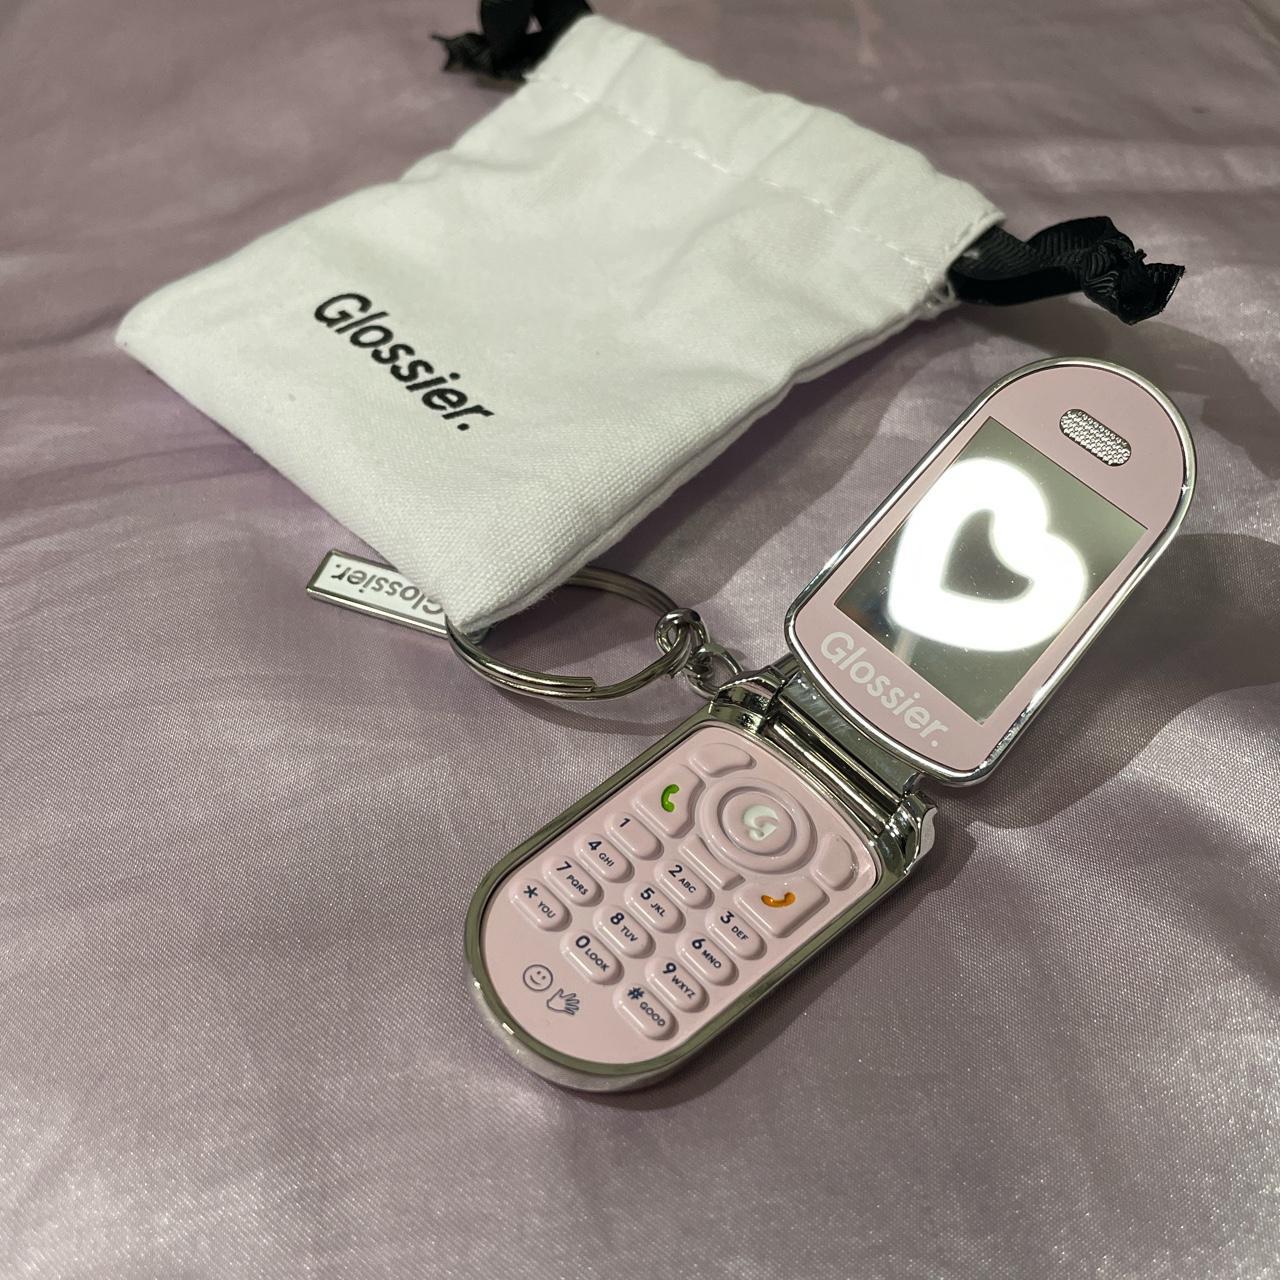 GLOSSIER x Los Angeles LA Flip Phone Mirror Keychain Key Exclusive Charm  NEW bag